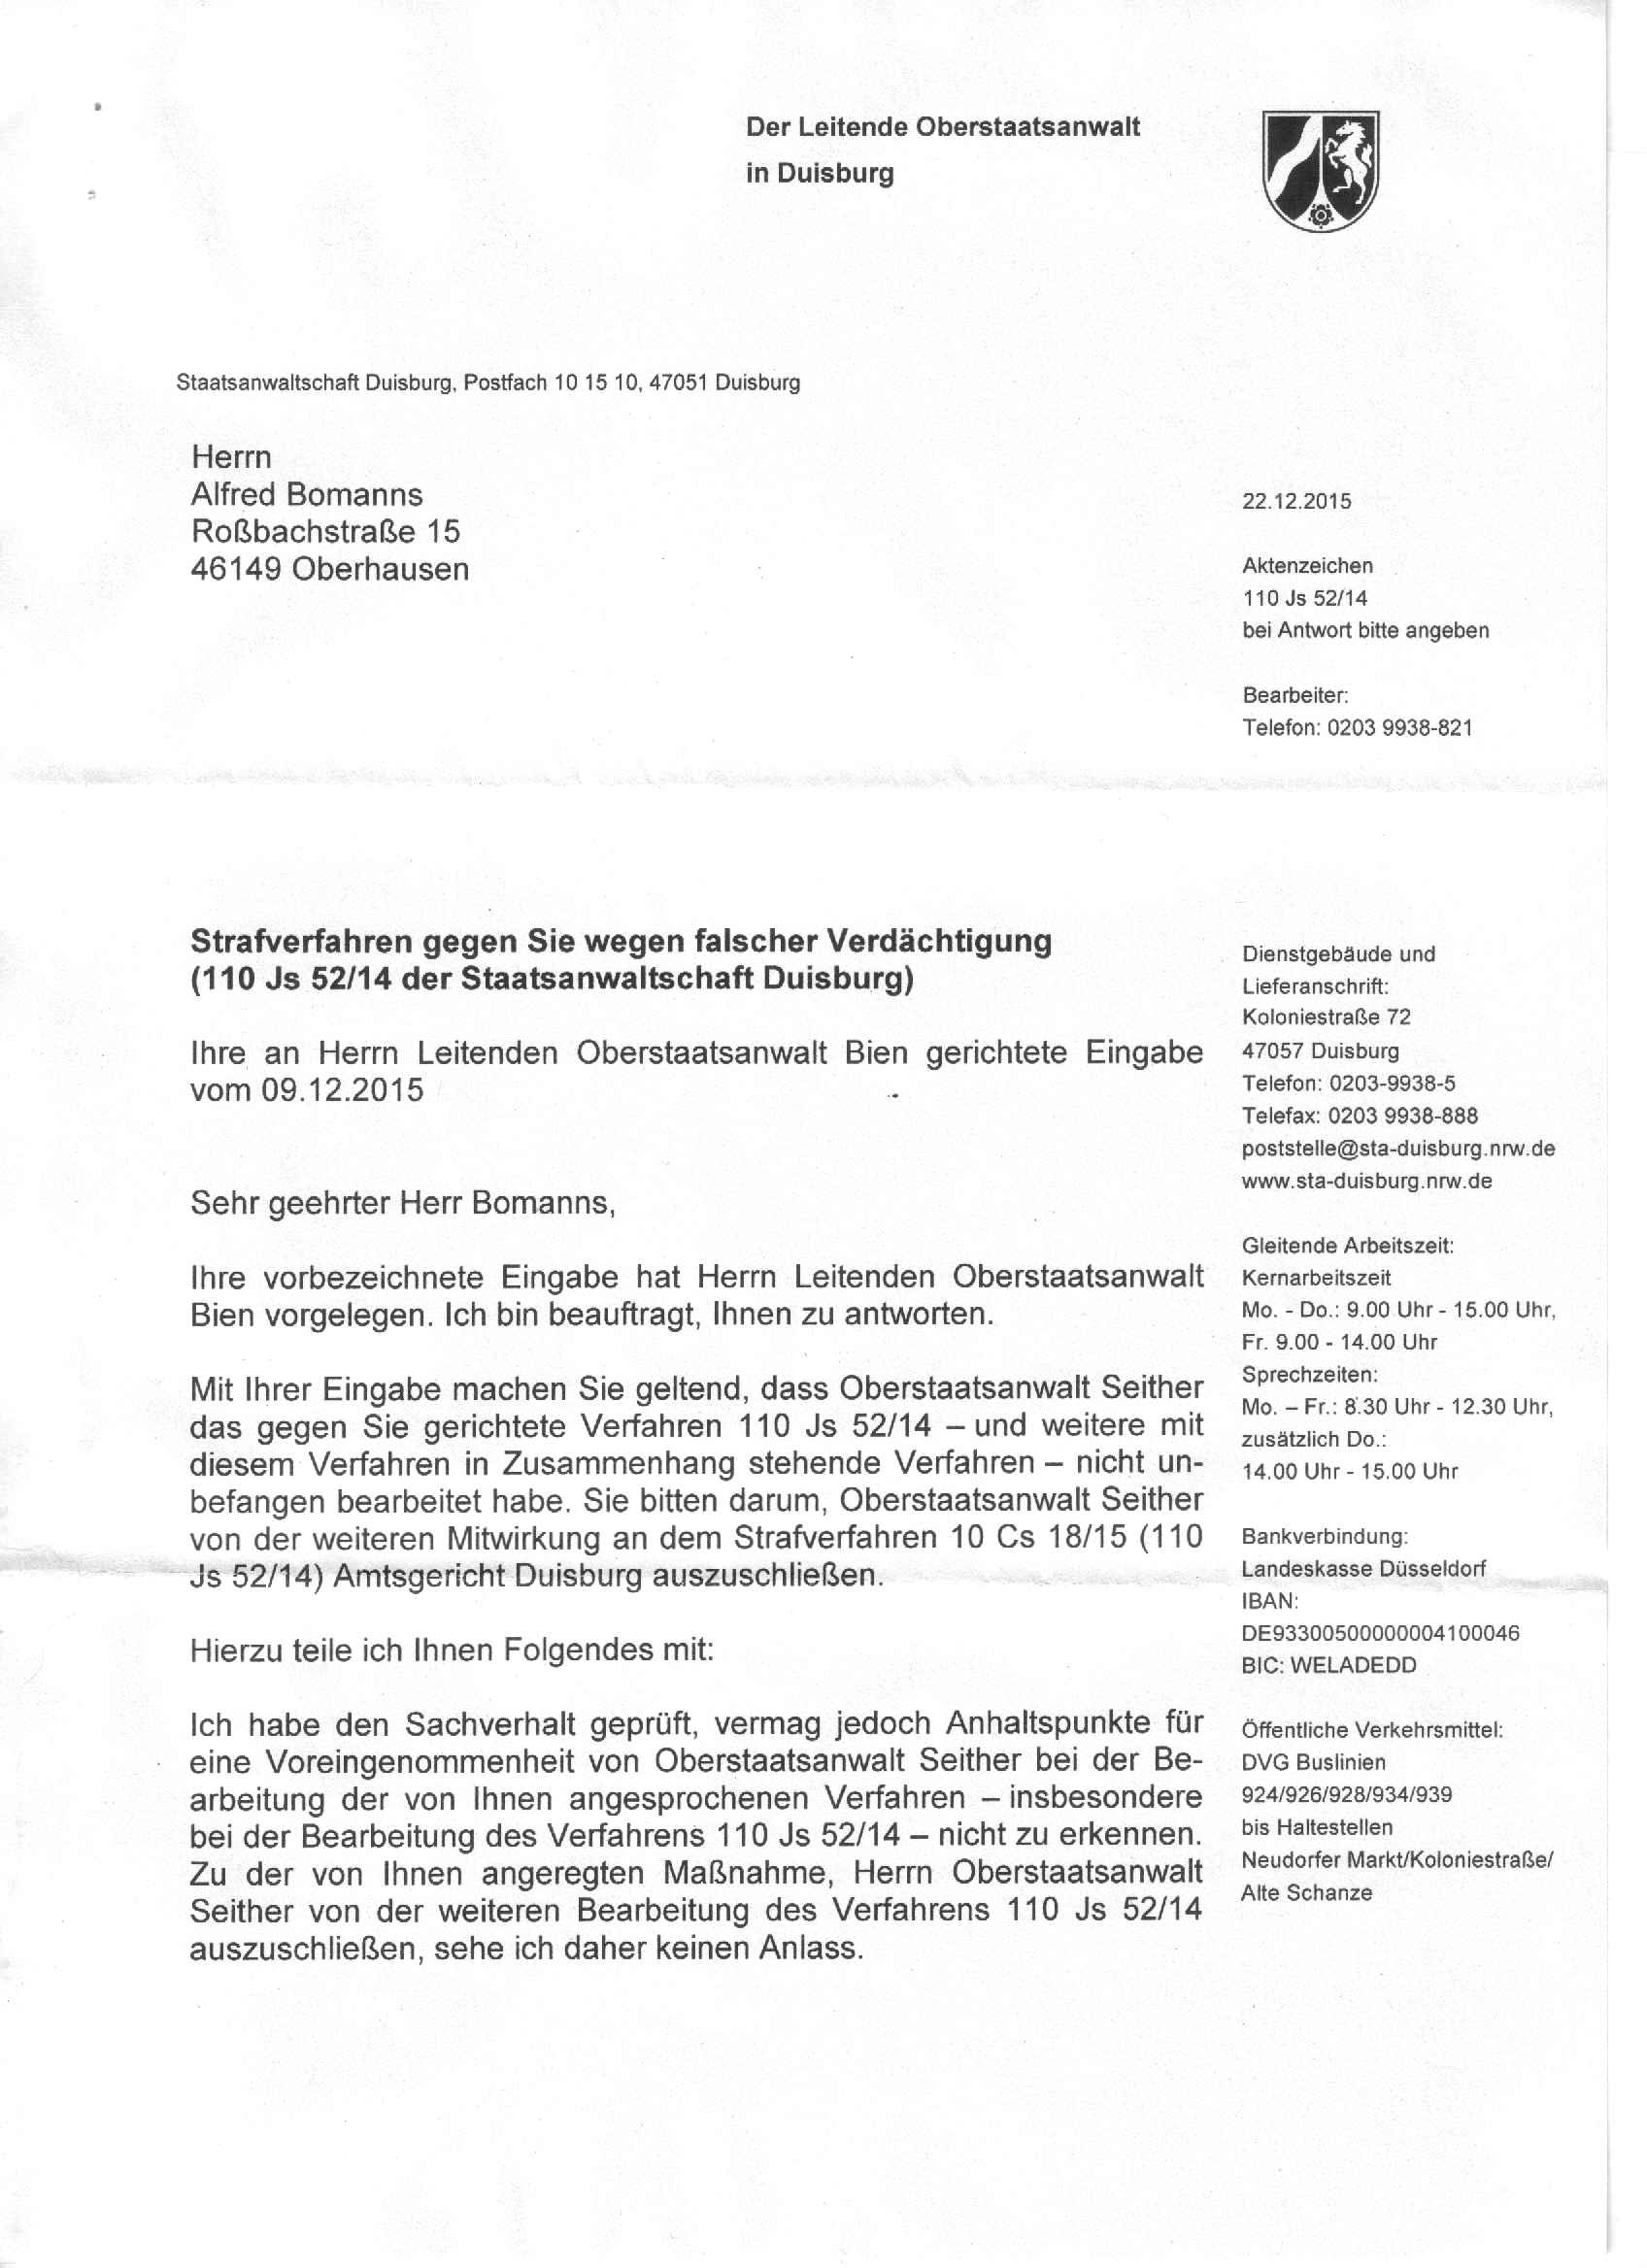 Bescheid des Oberstaatsanwalts Martin Fischer, Staatsanwaltschaft Duisburg, vom 22.12.2015, S. 1